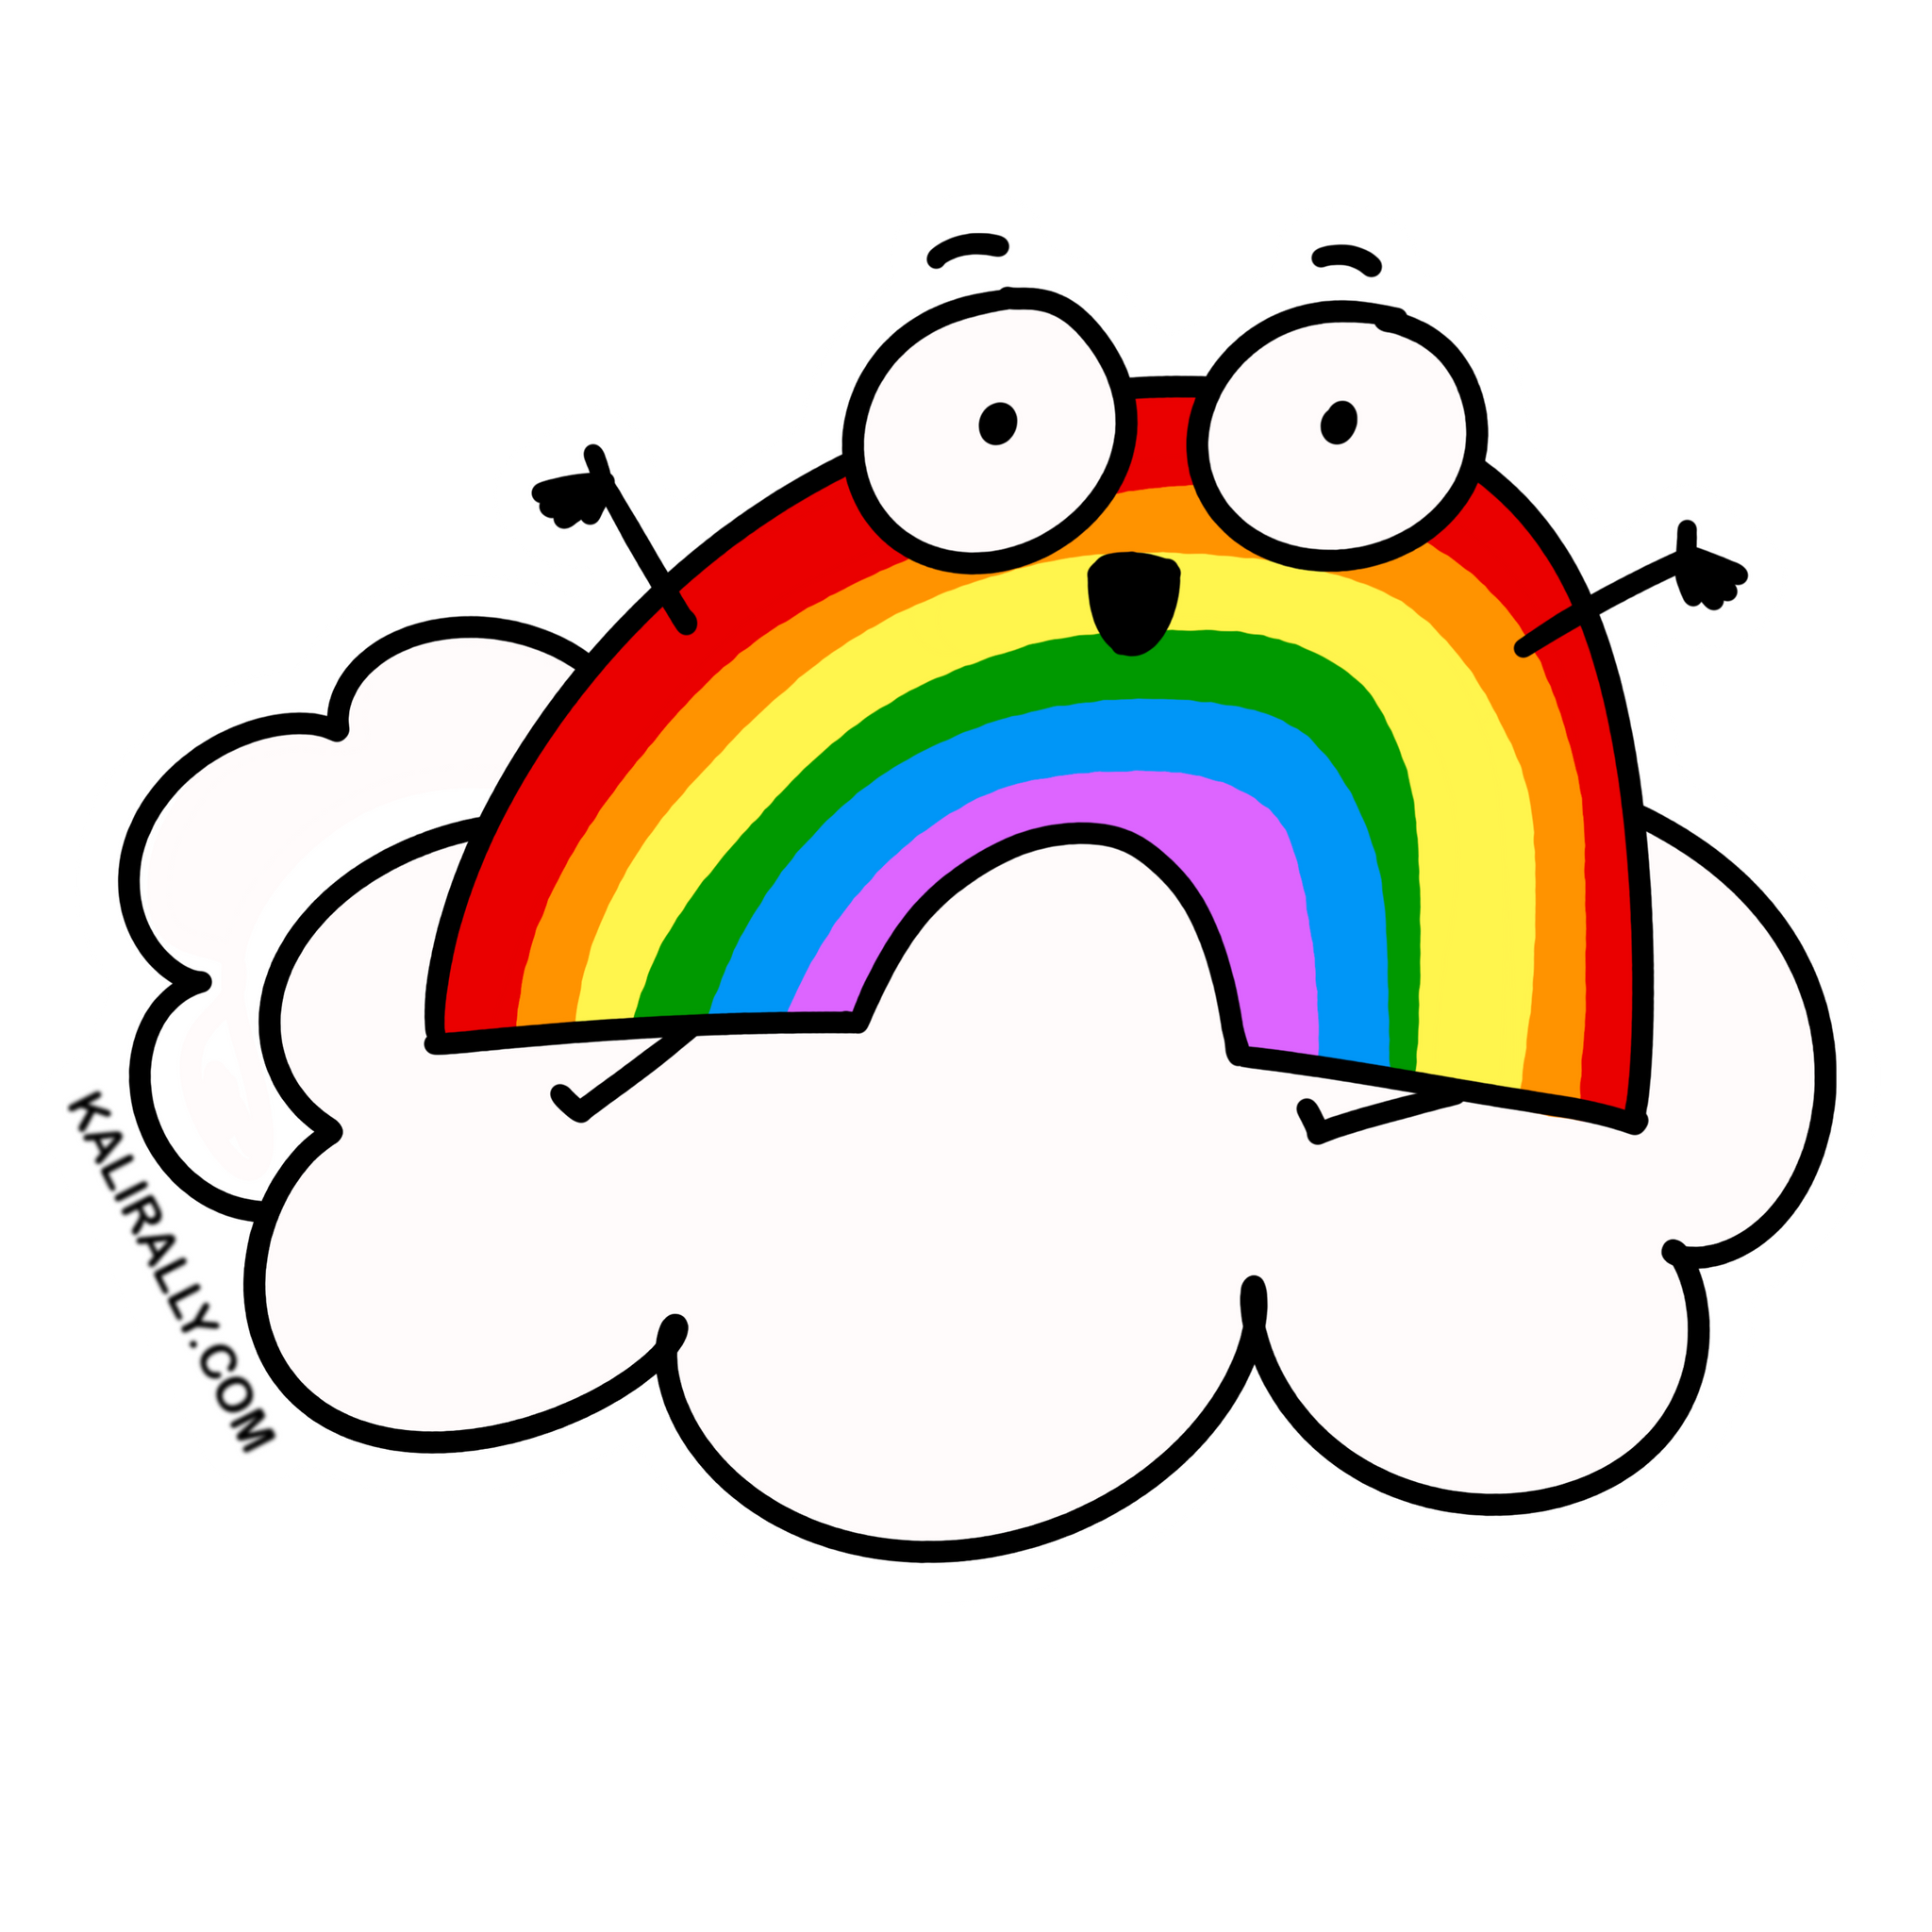 Rainbow sitting on a cloud sticker, happy rainbow sticker, rainbow cartoon, waterproof vinyl sticker, kalirally decal